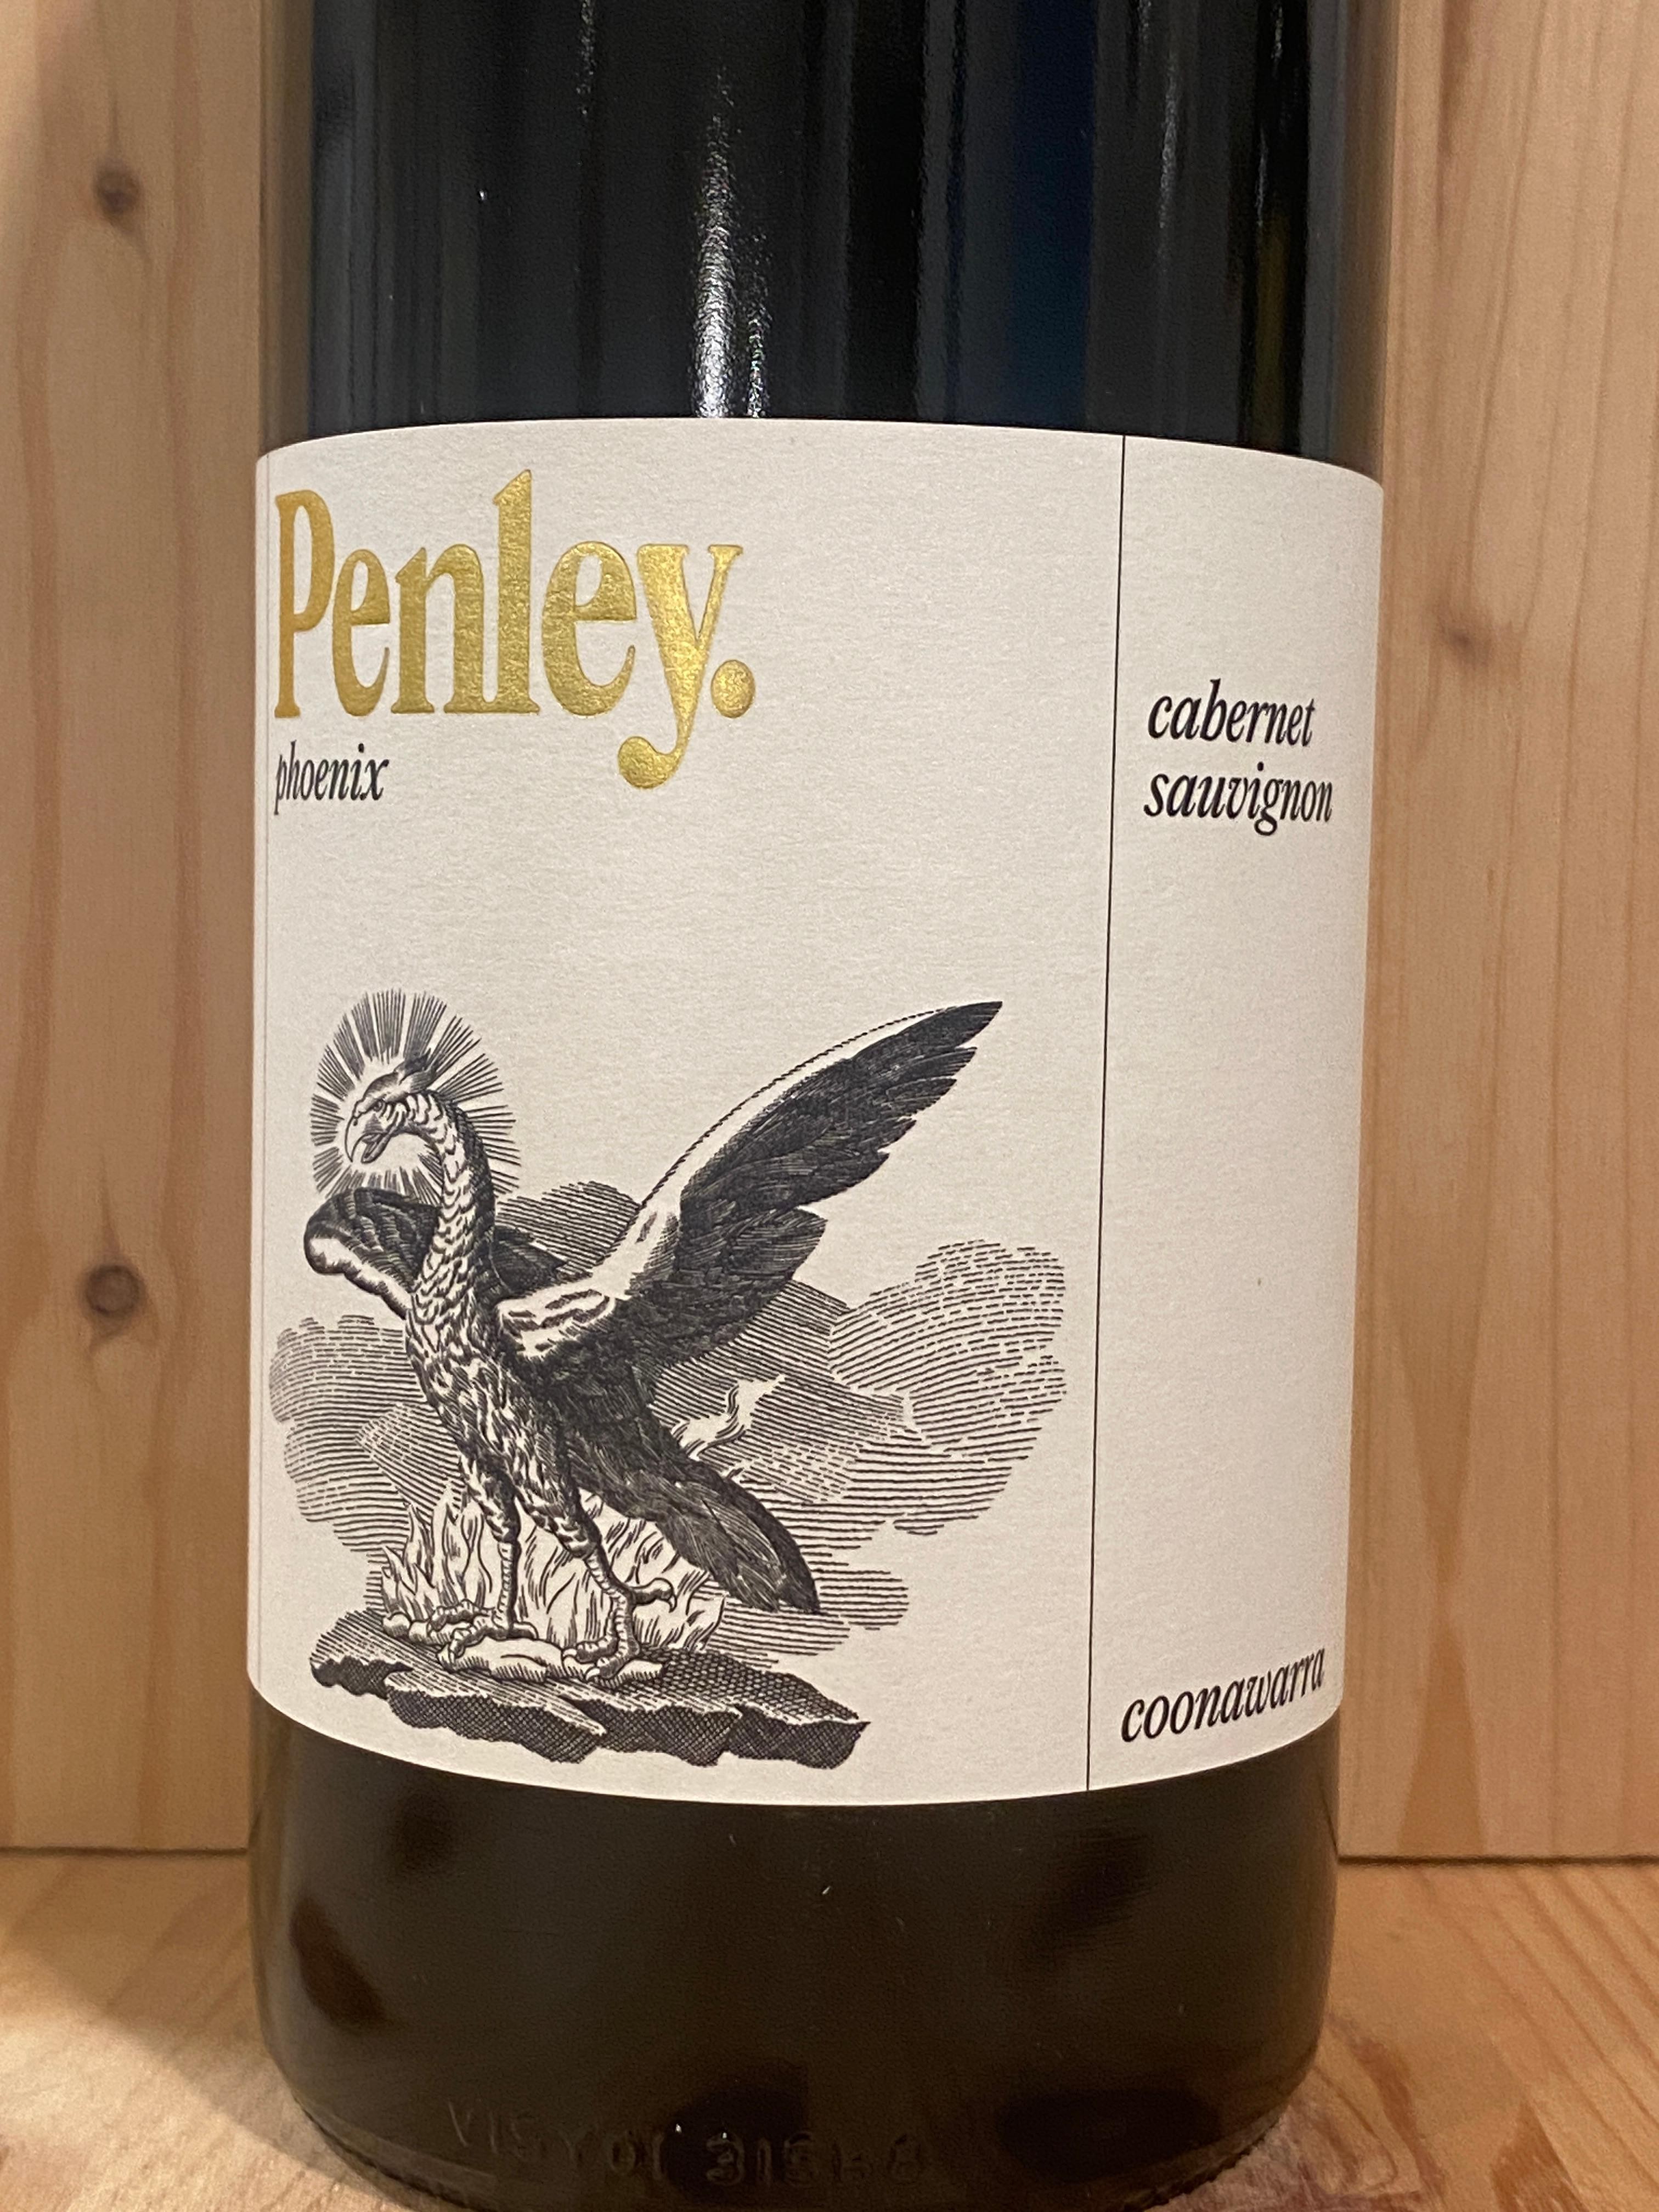 Penley "Phoenix" Cabernet Sauvignon 2021: Coonawarra, Limestone Coast, Australia